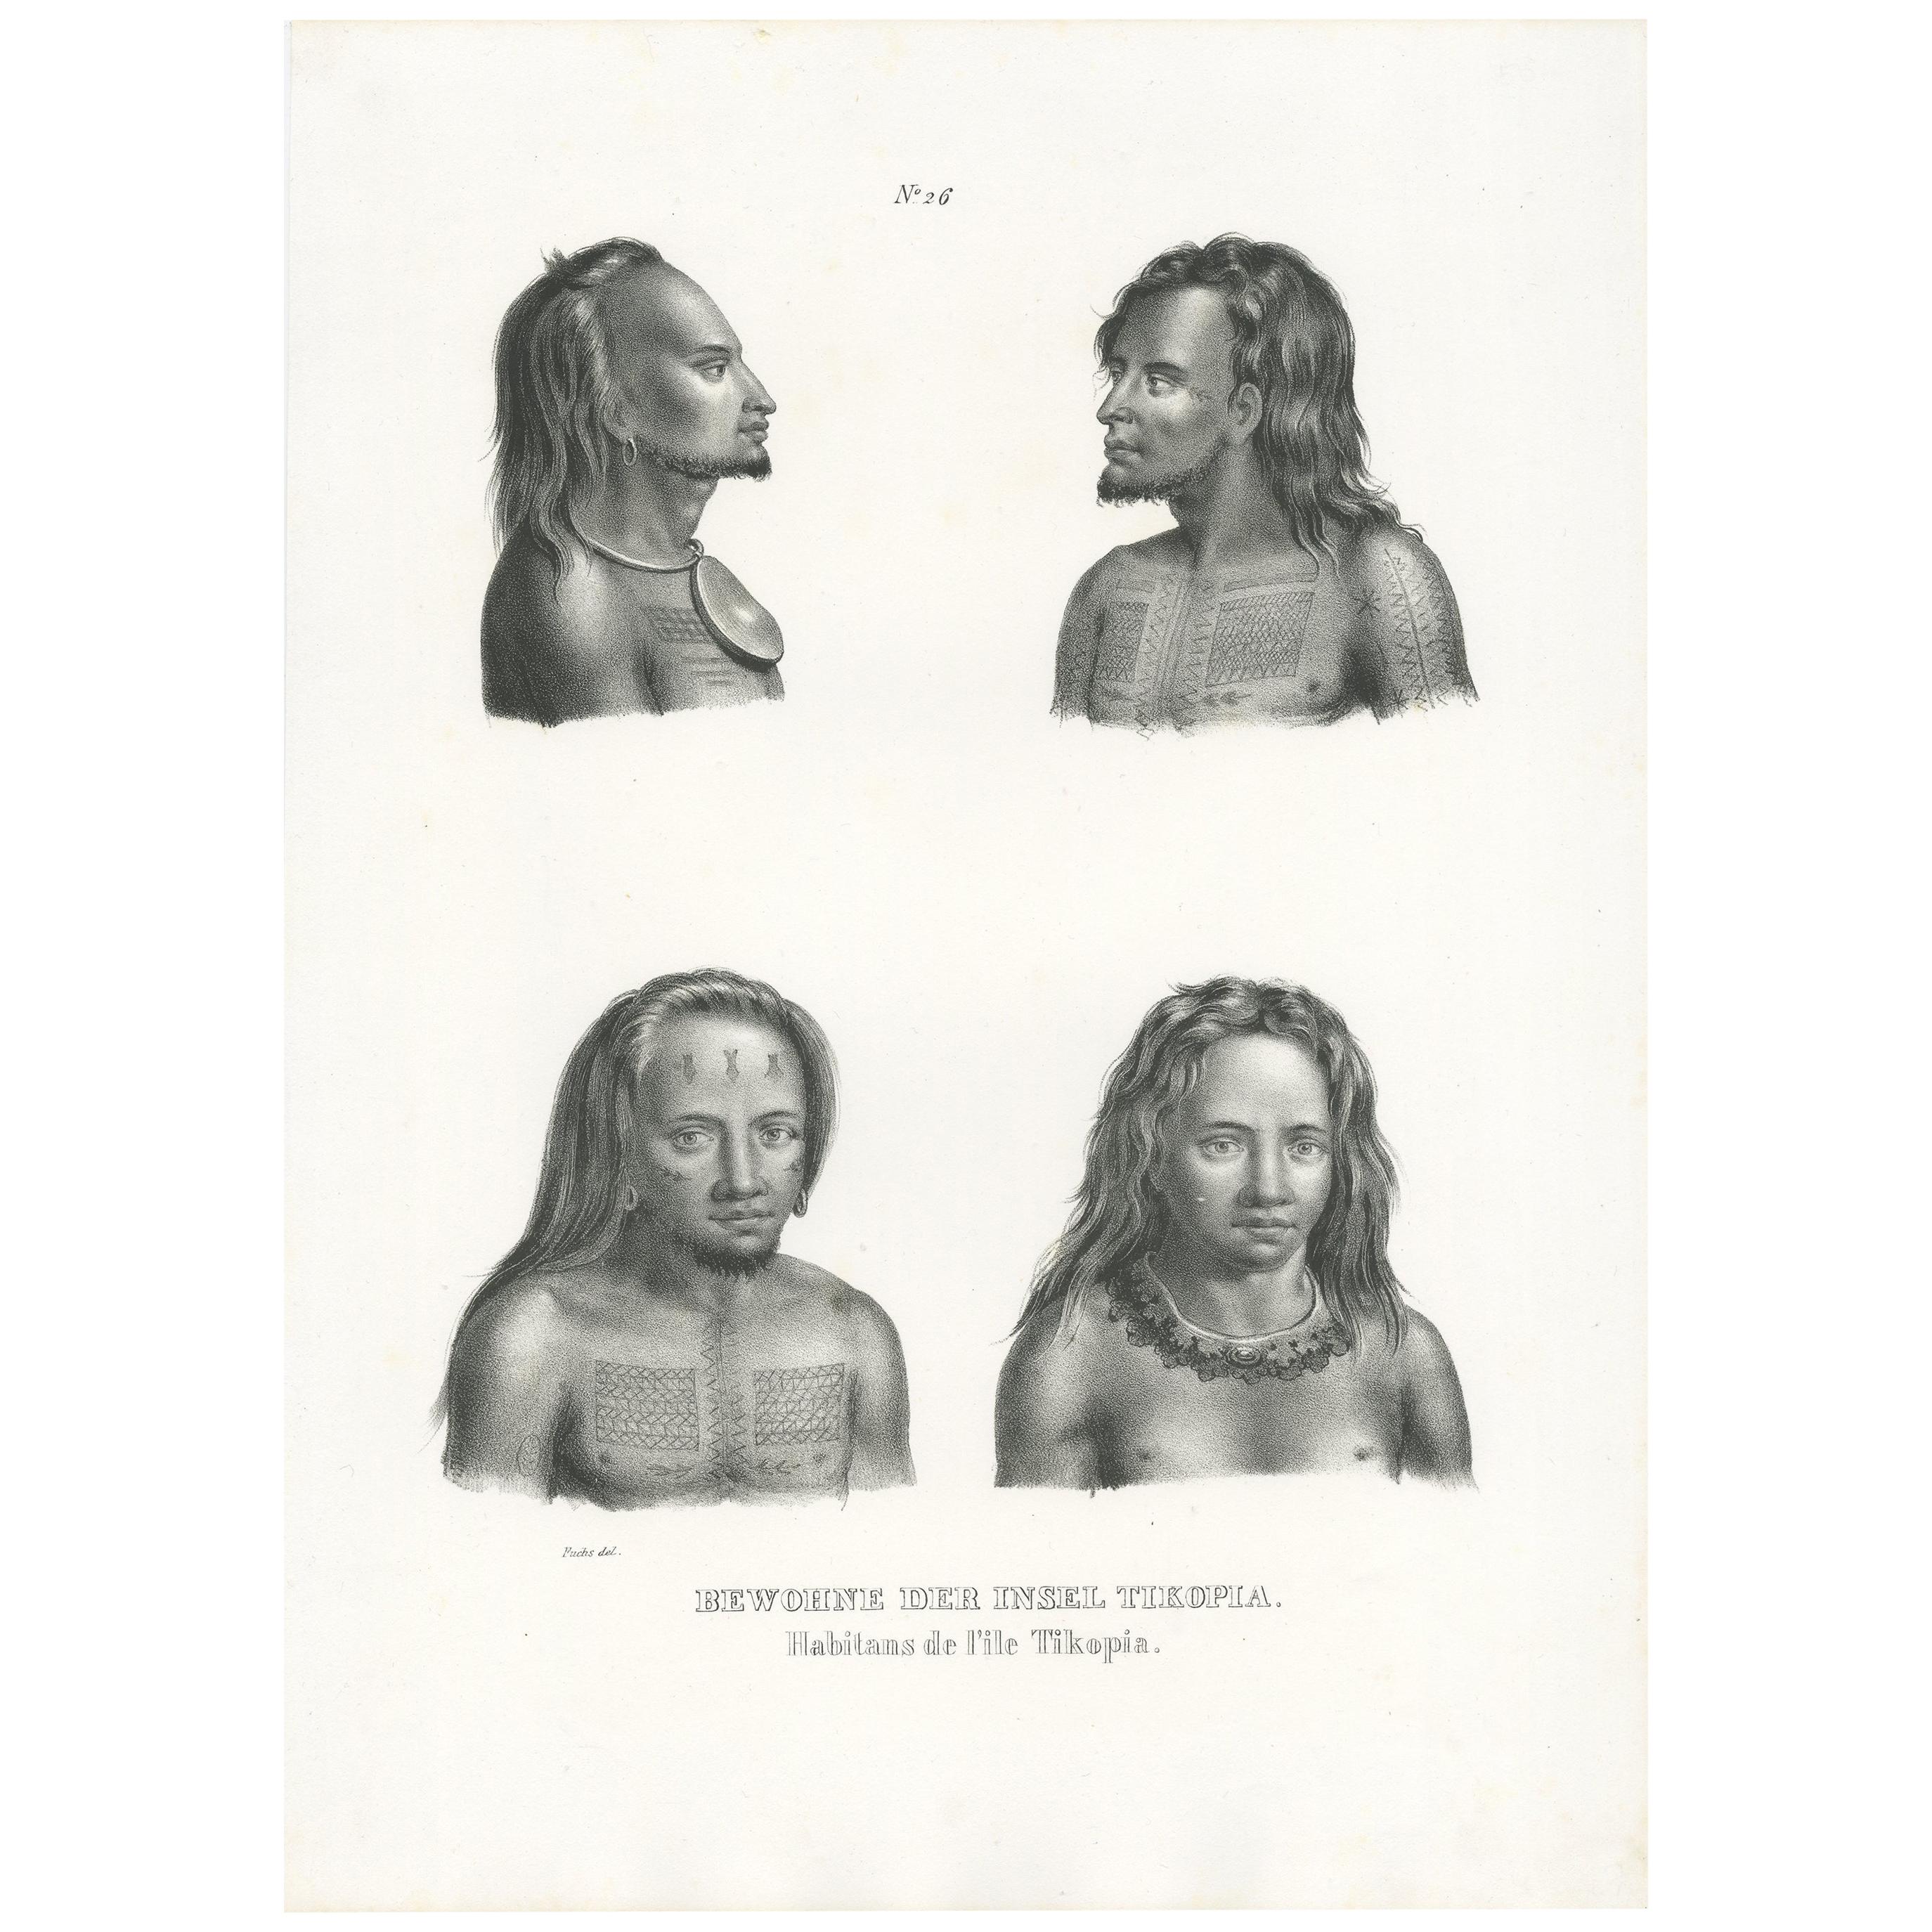 Antique Print of Natives of Tikopia by Honegger, 1845